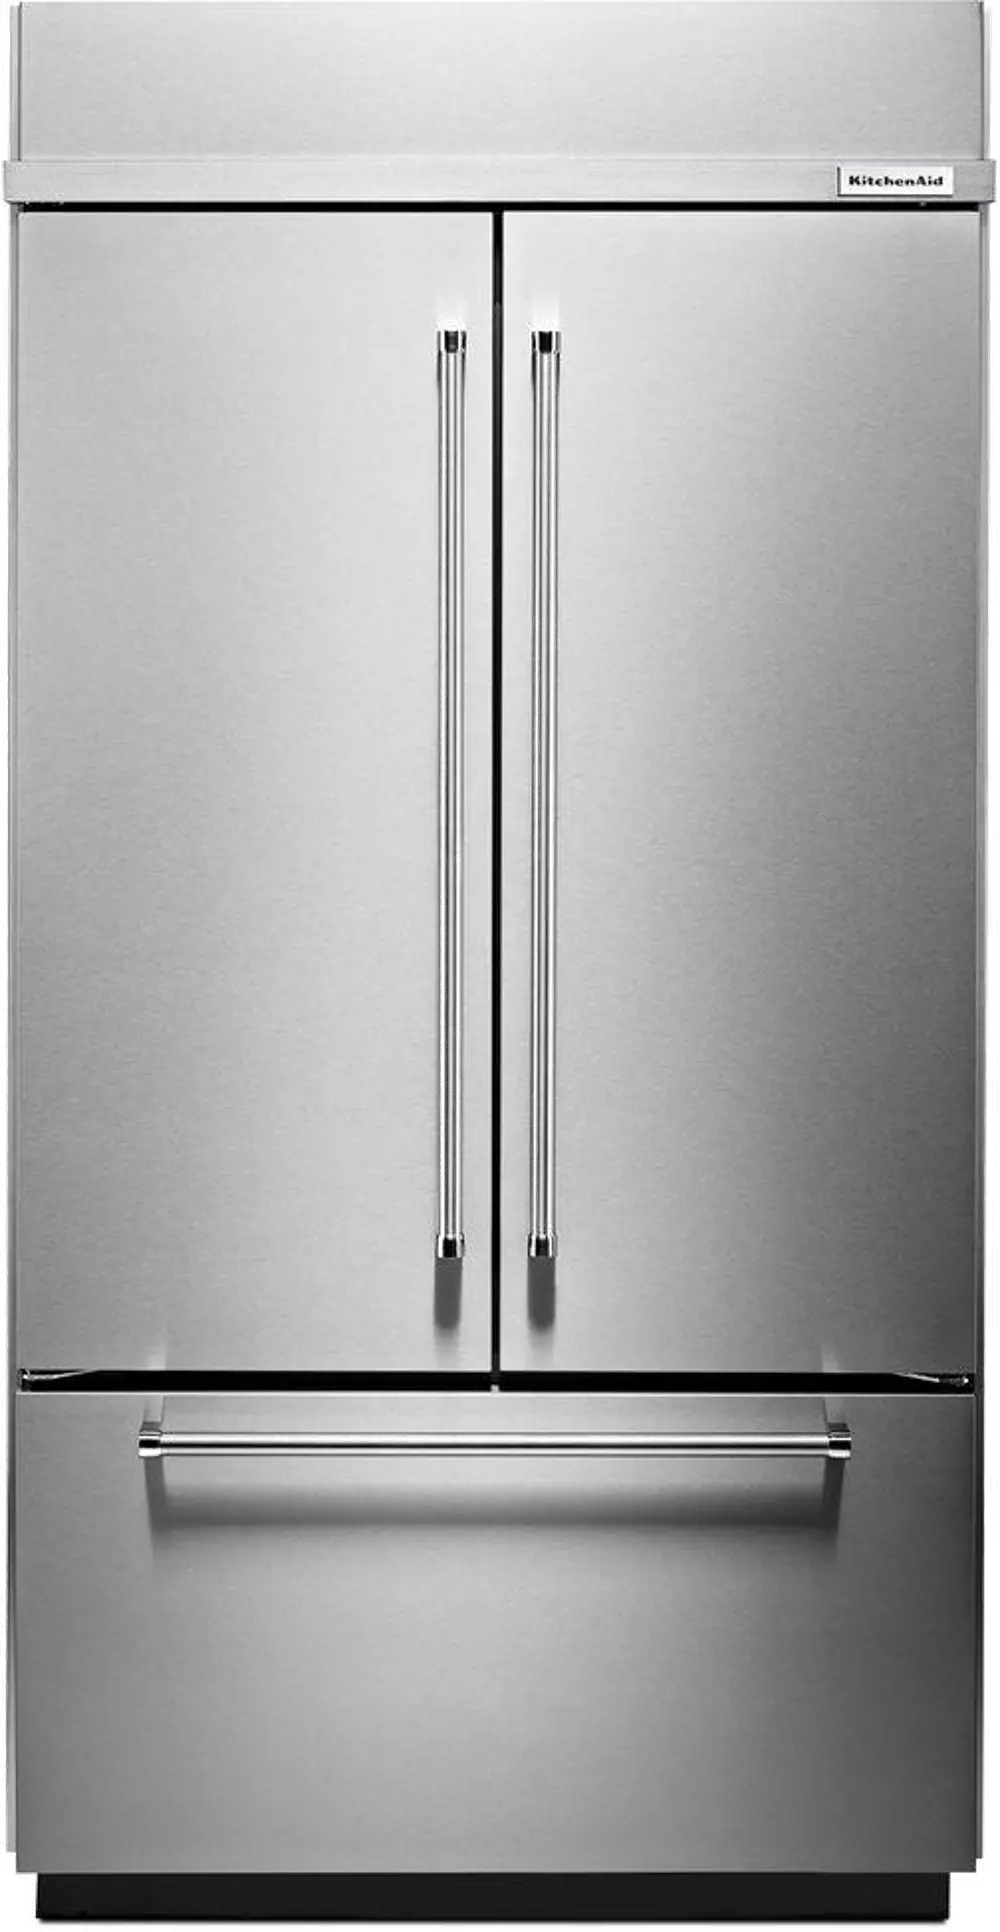 KBFN502ESS KitchenAid Built-In French Door Refrigerator - 42 Inch Stainless Steel-1